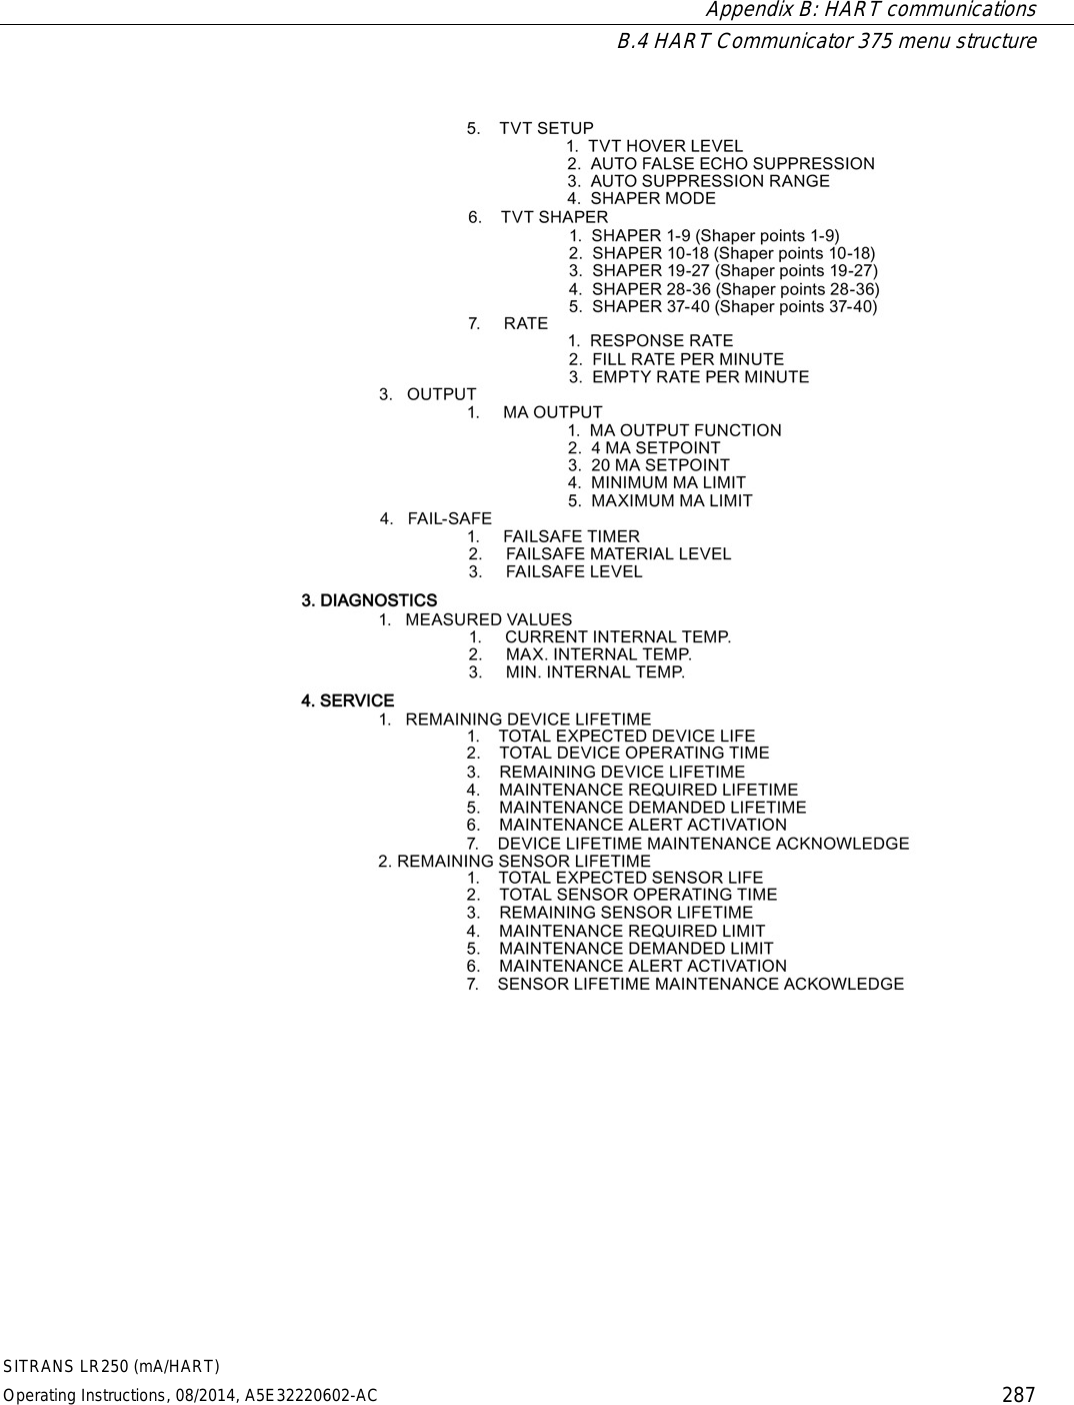  Appendix B: HART communications  B.4 HART Communicator 375 menu structure SITRANS LR250 (mA/HART) Operating Instructions, 08/2014, A5E32220602-AC 287  